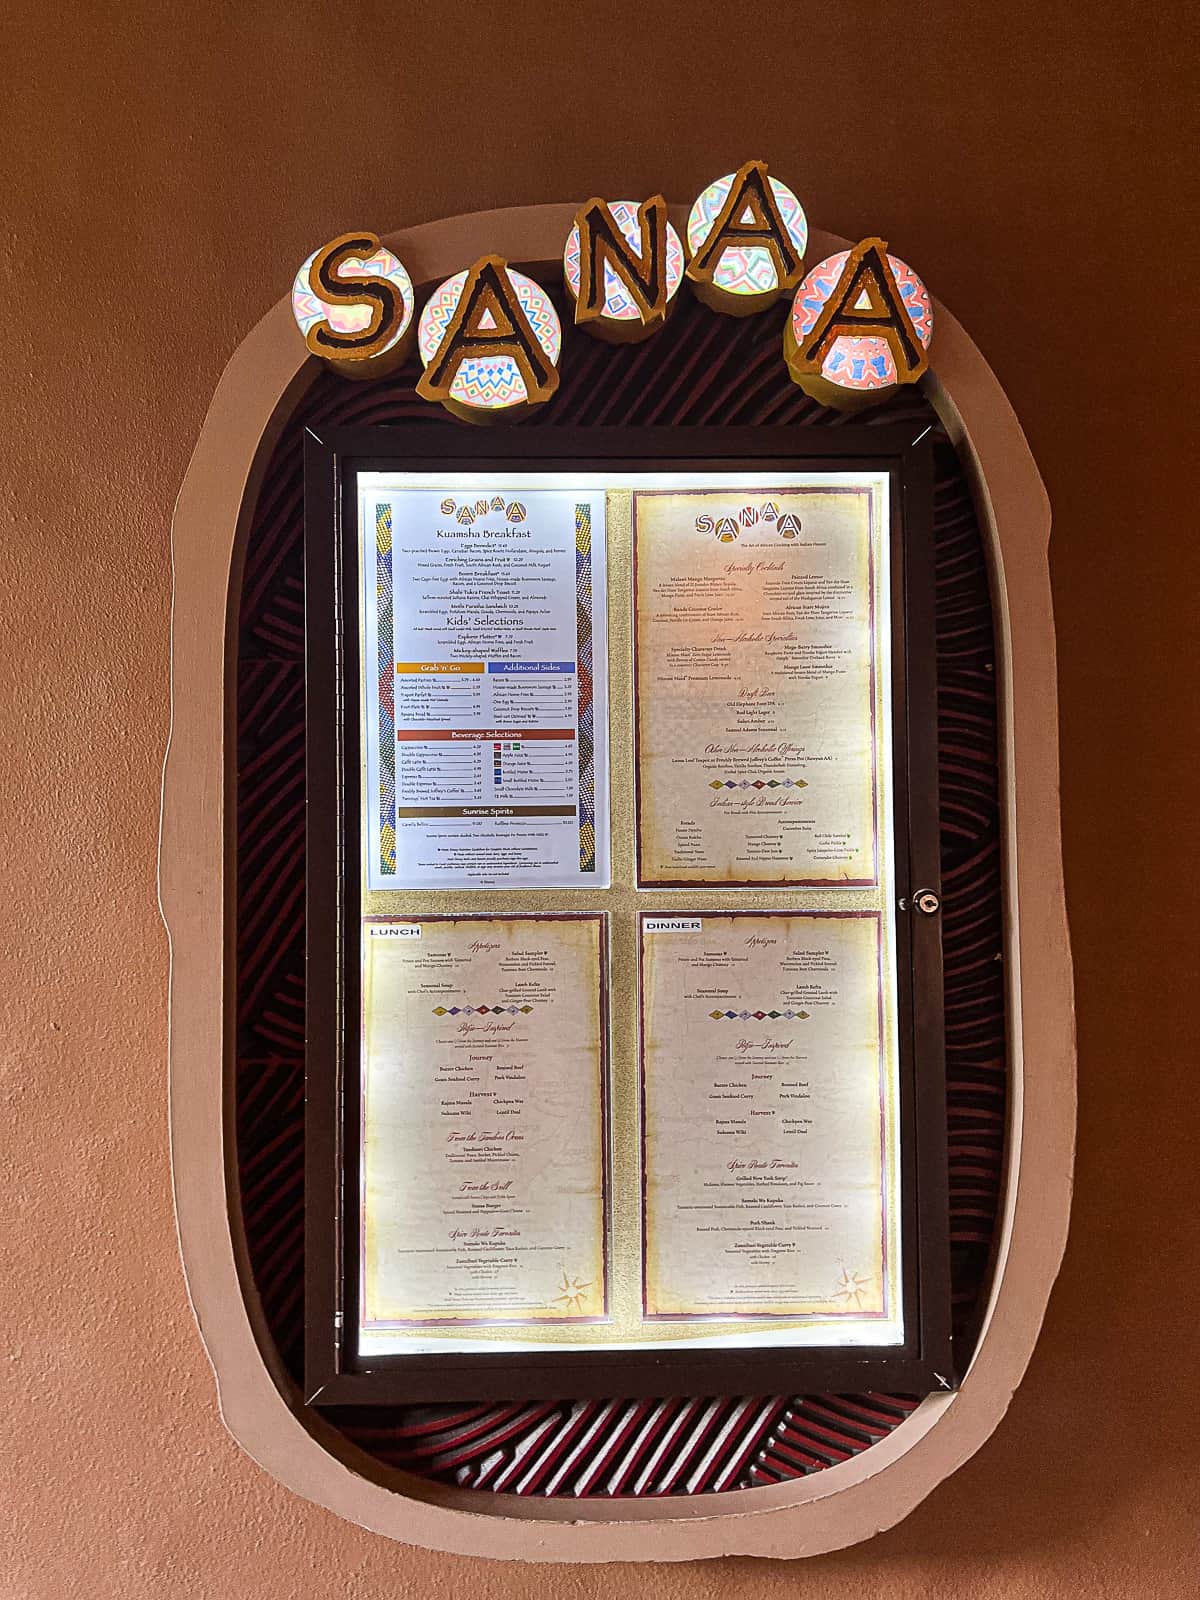 Sanaa Menus for lunch and drinks at Animal Kingdom Lodge Resort at Disney World